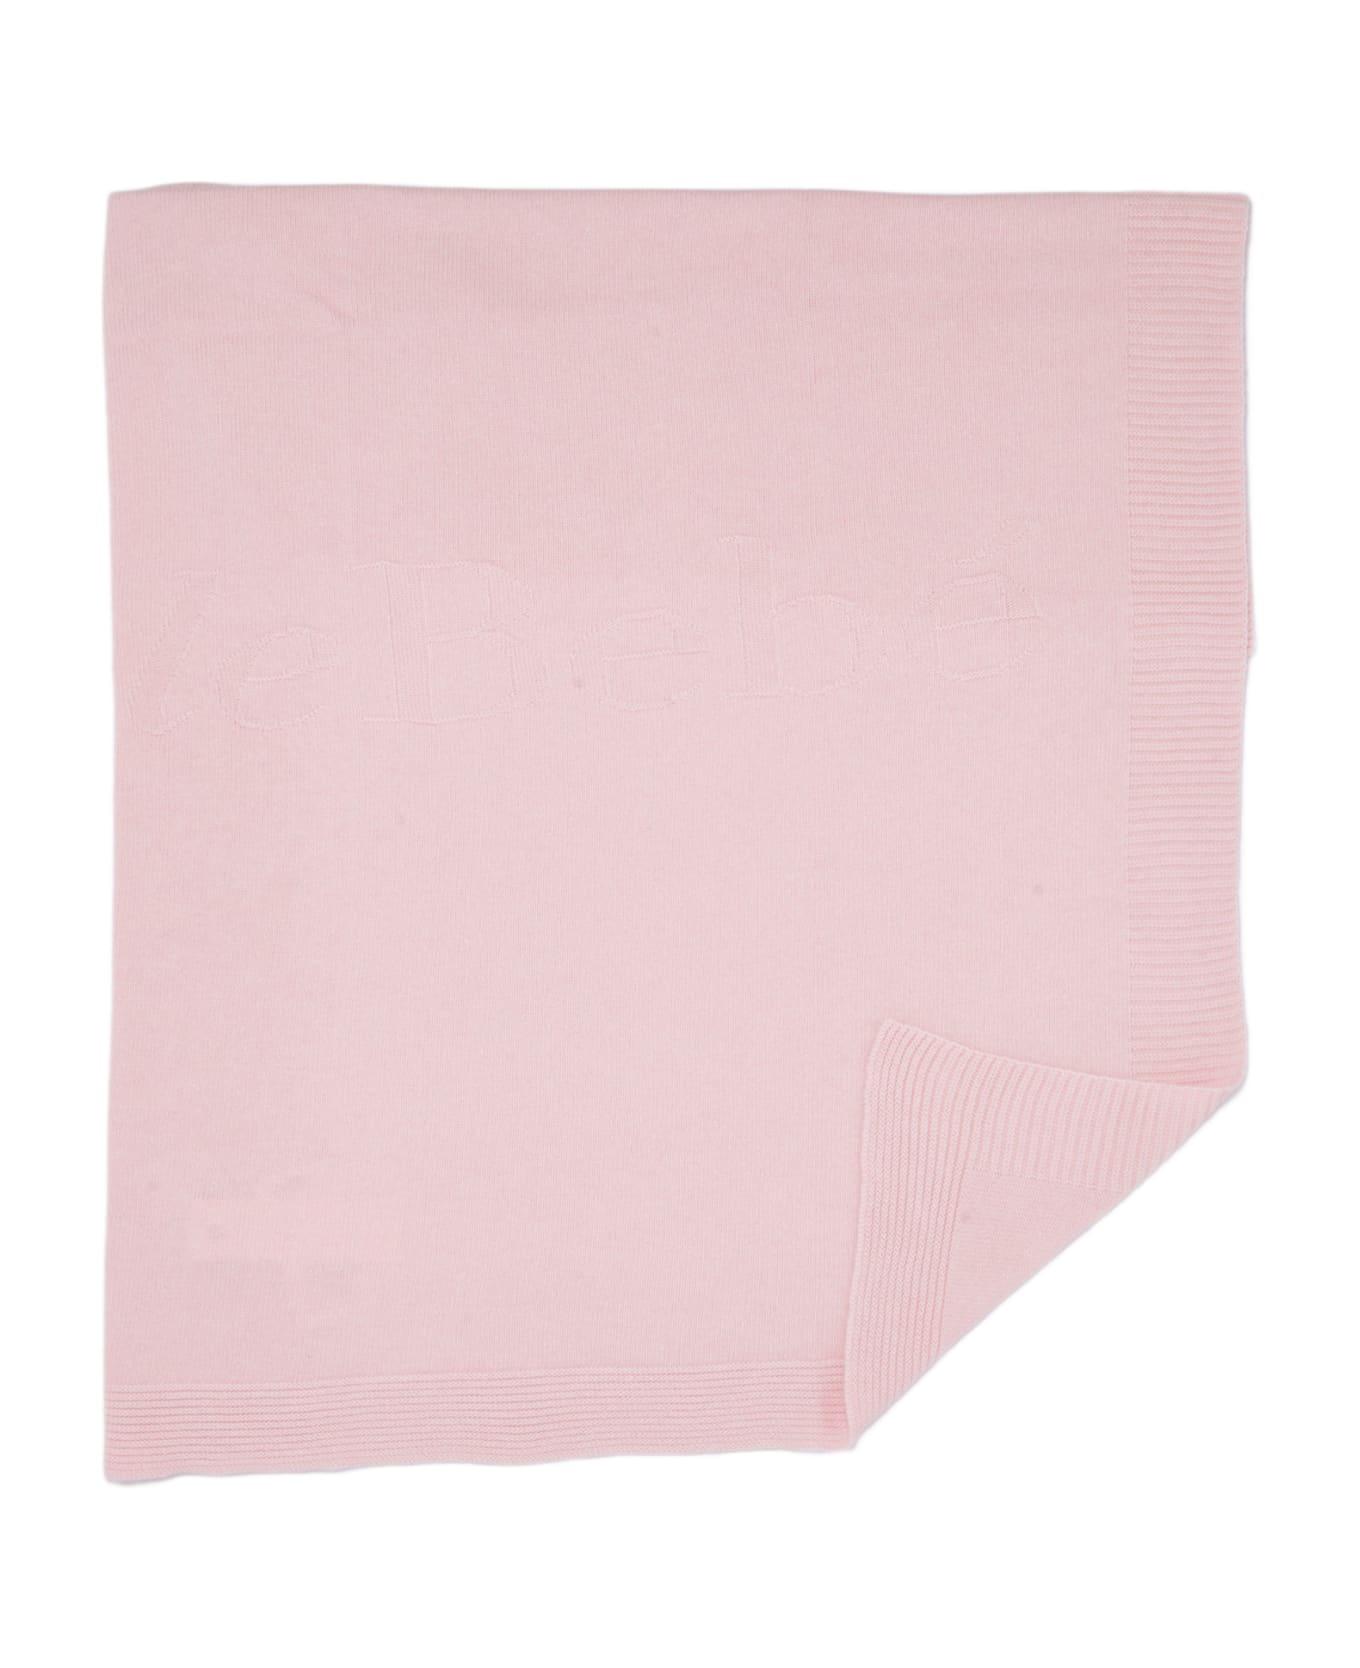 leBebé Blanket Towel - ROSA